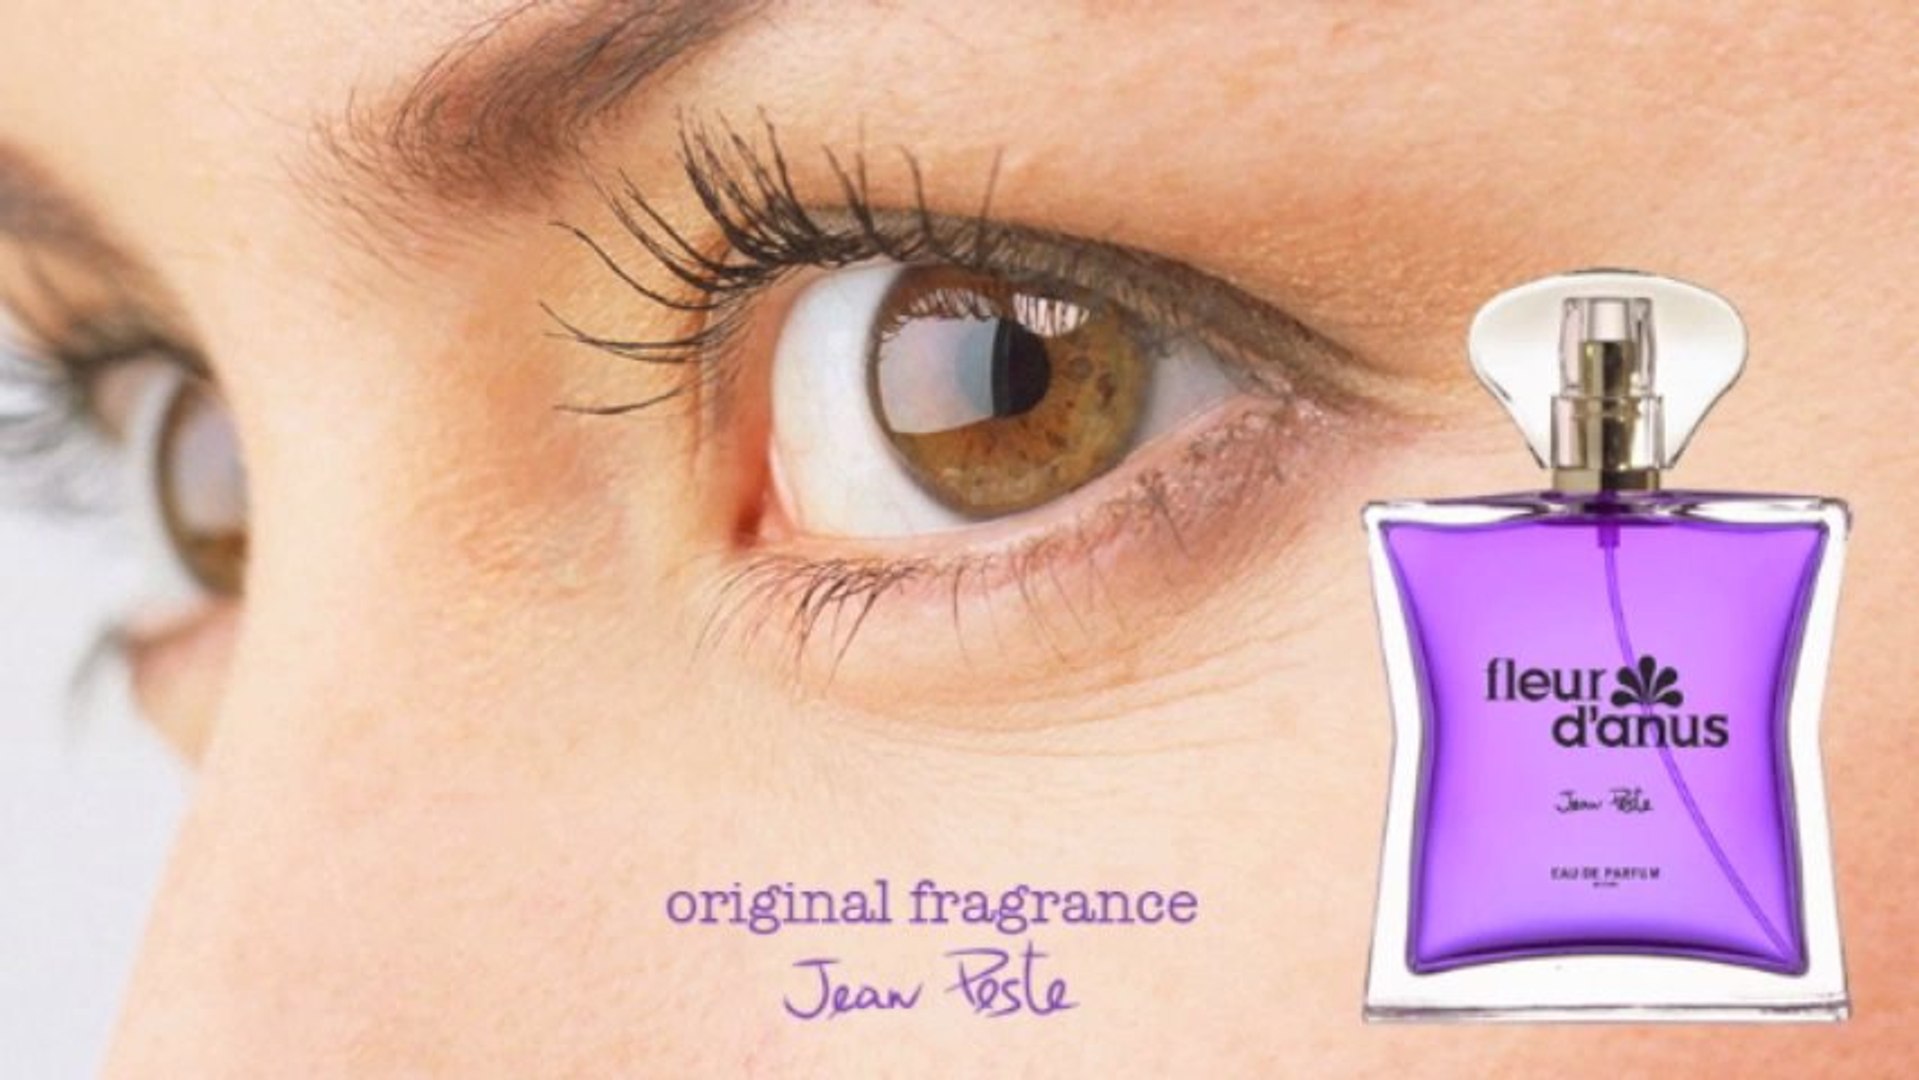 Jean Peste Fleur d'Anus Original Fragrance - Vidéo Dailymotion